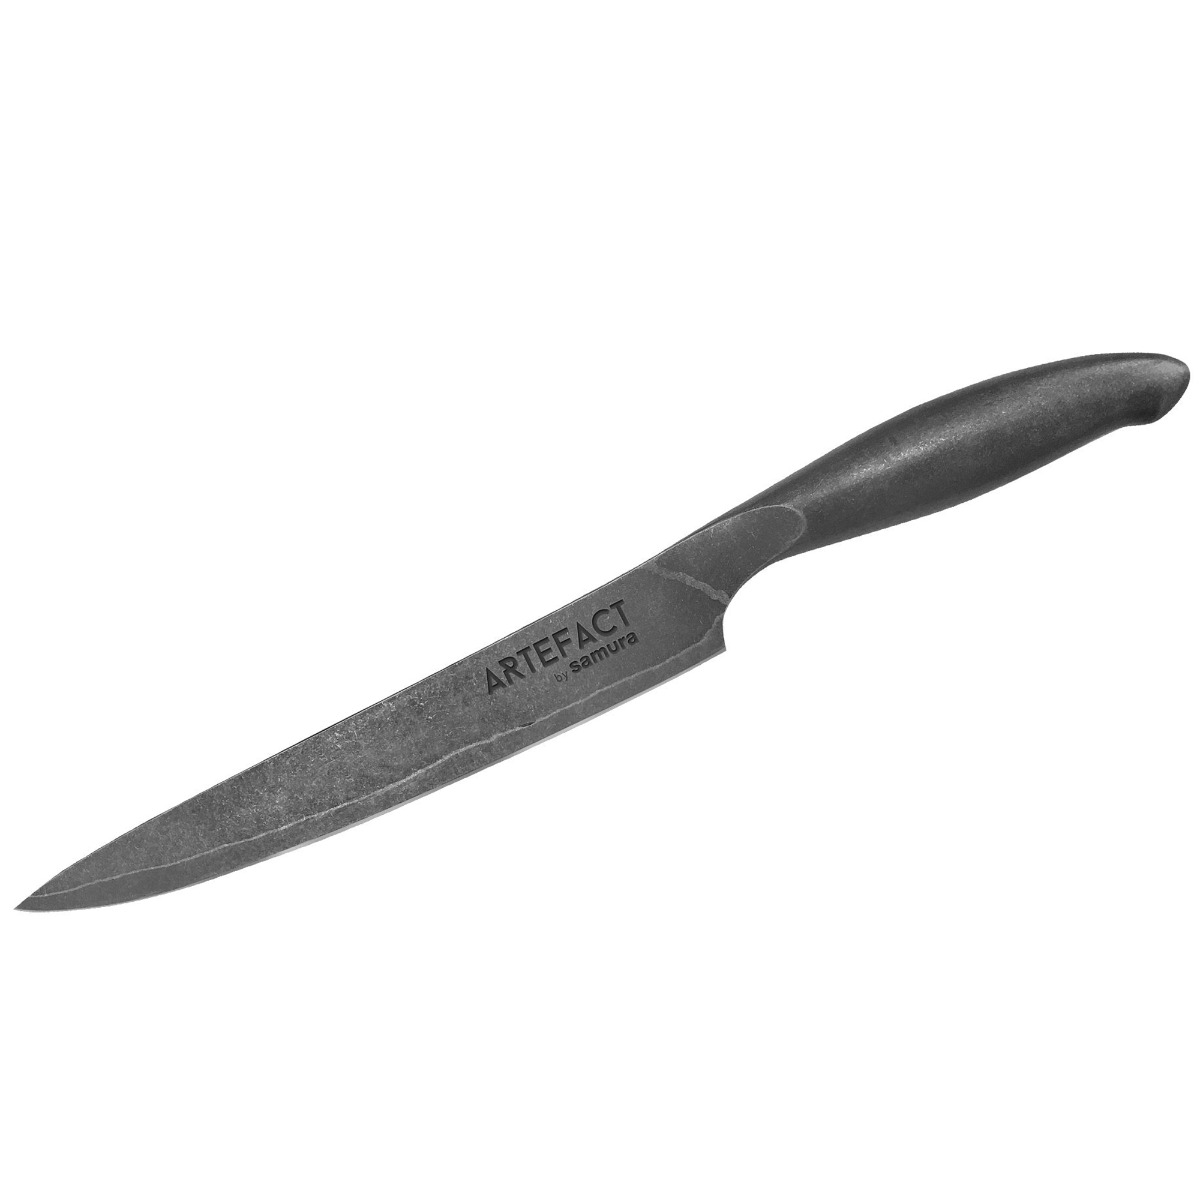 Slicing Knife 20.6cm, ARTEFACT - SAMURA®️